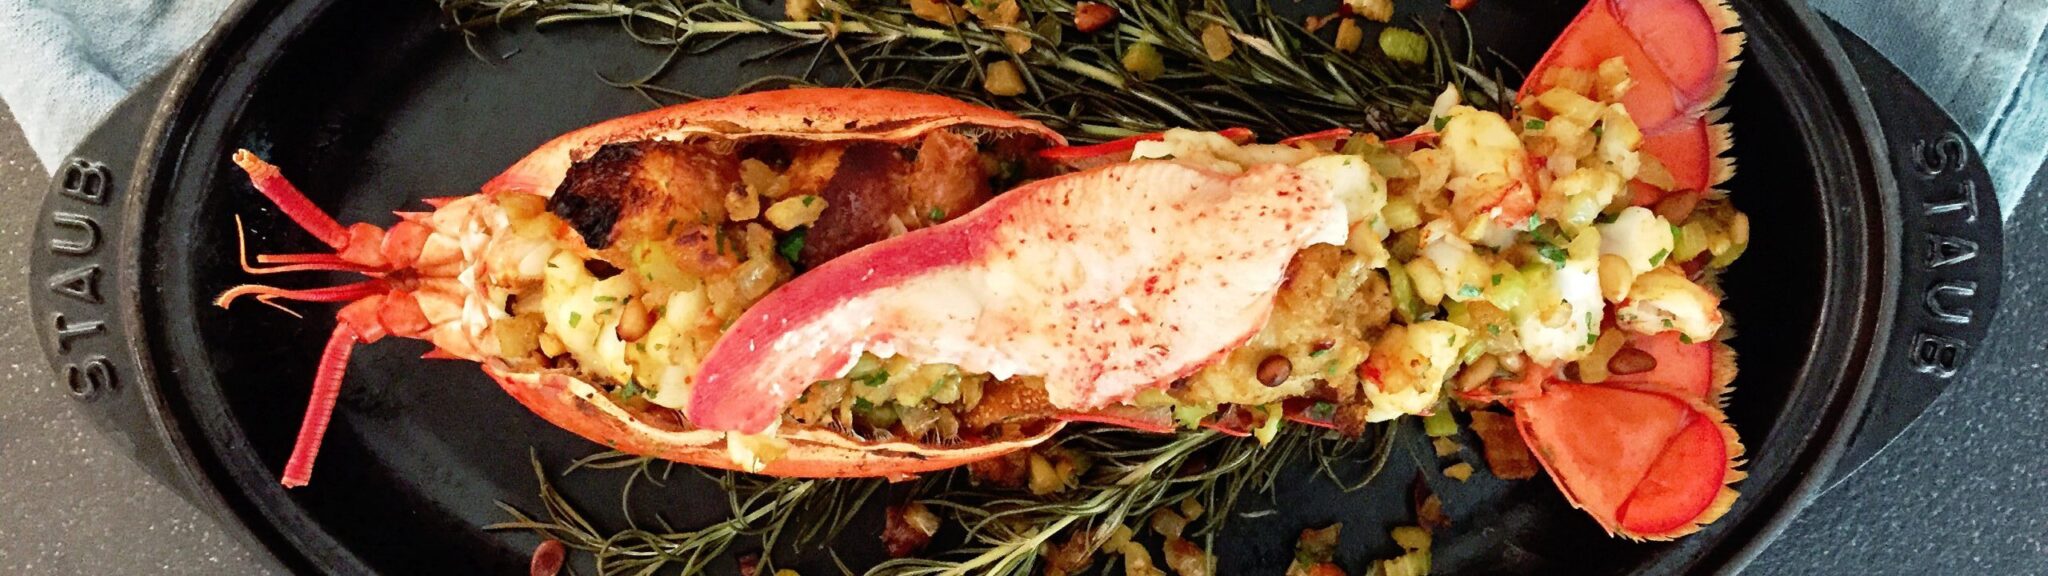 Stuffed Maine Lobster recipe image